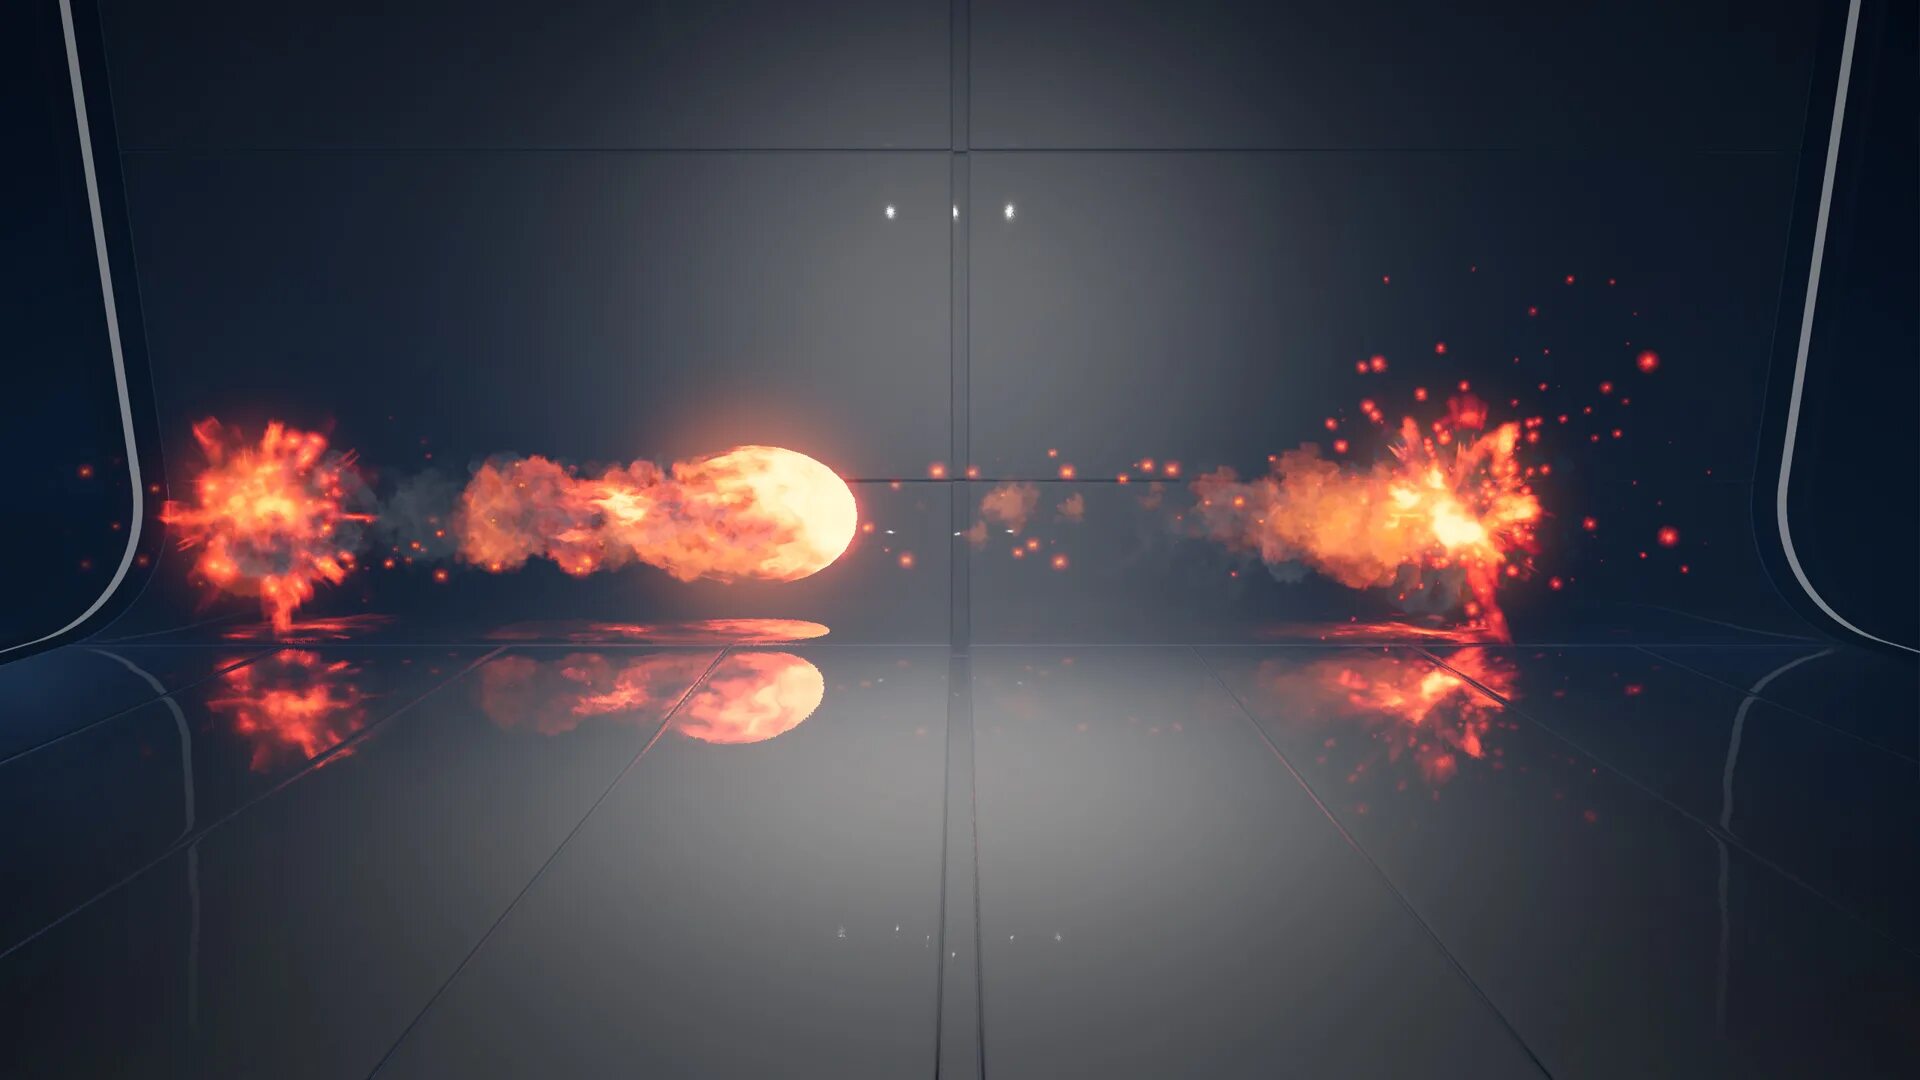 Ue4 Fireball. Unreal engine VFX. Спецэффекты Unreal engine 4. Vfx эффекты